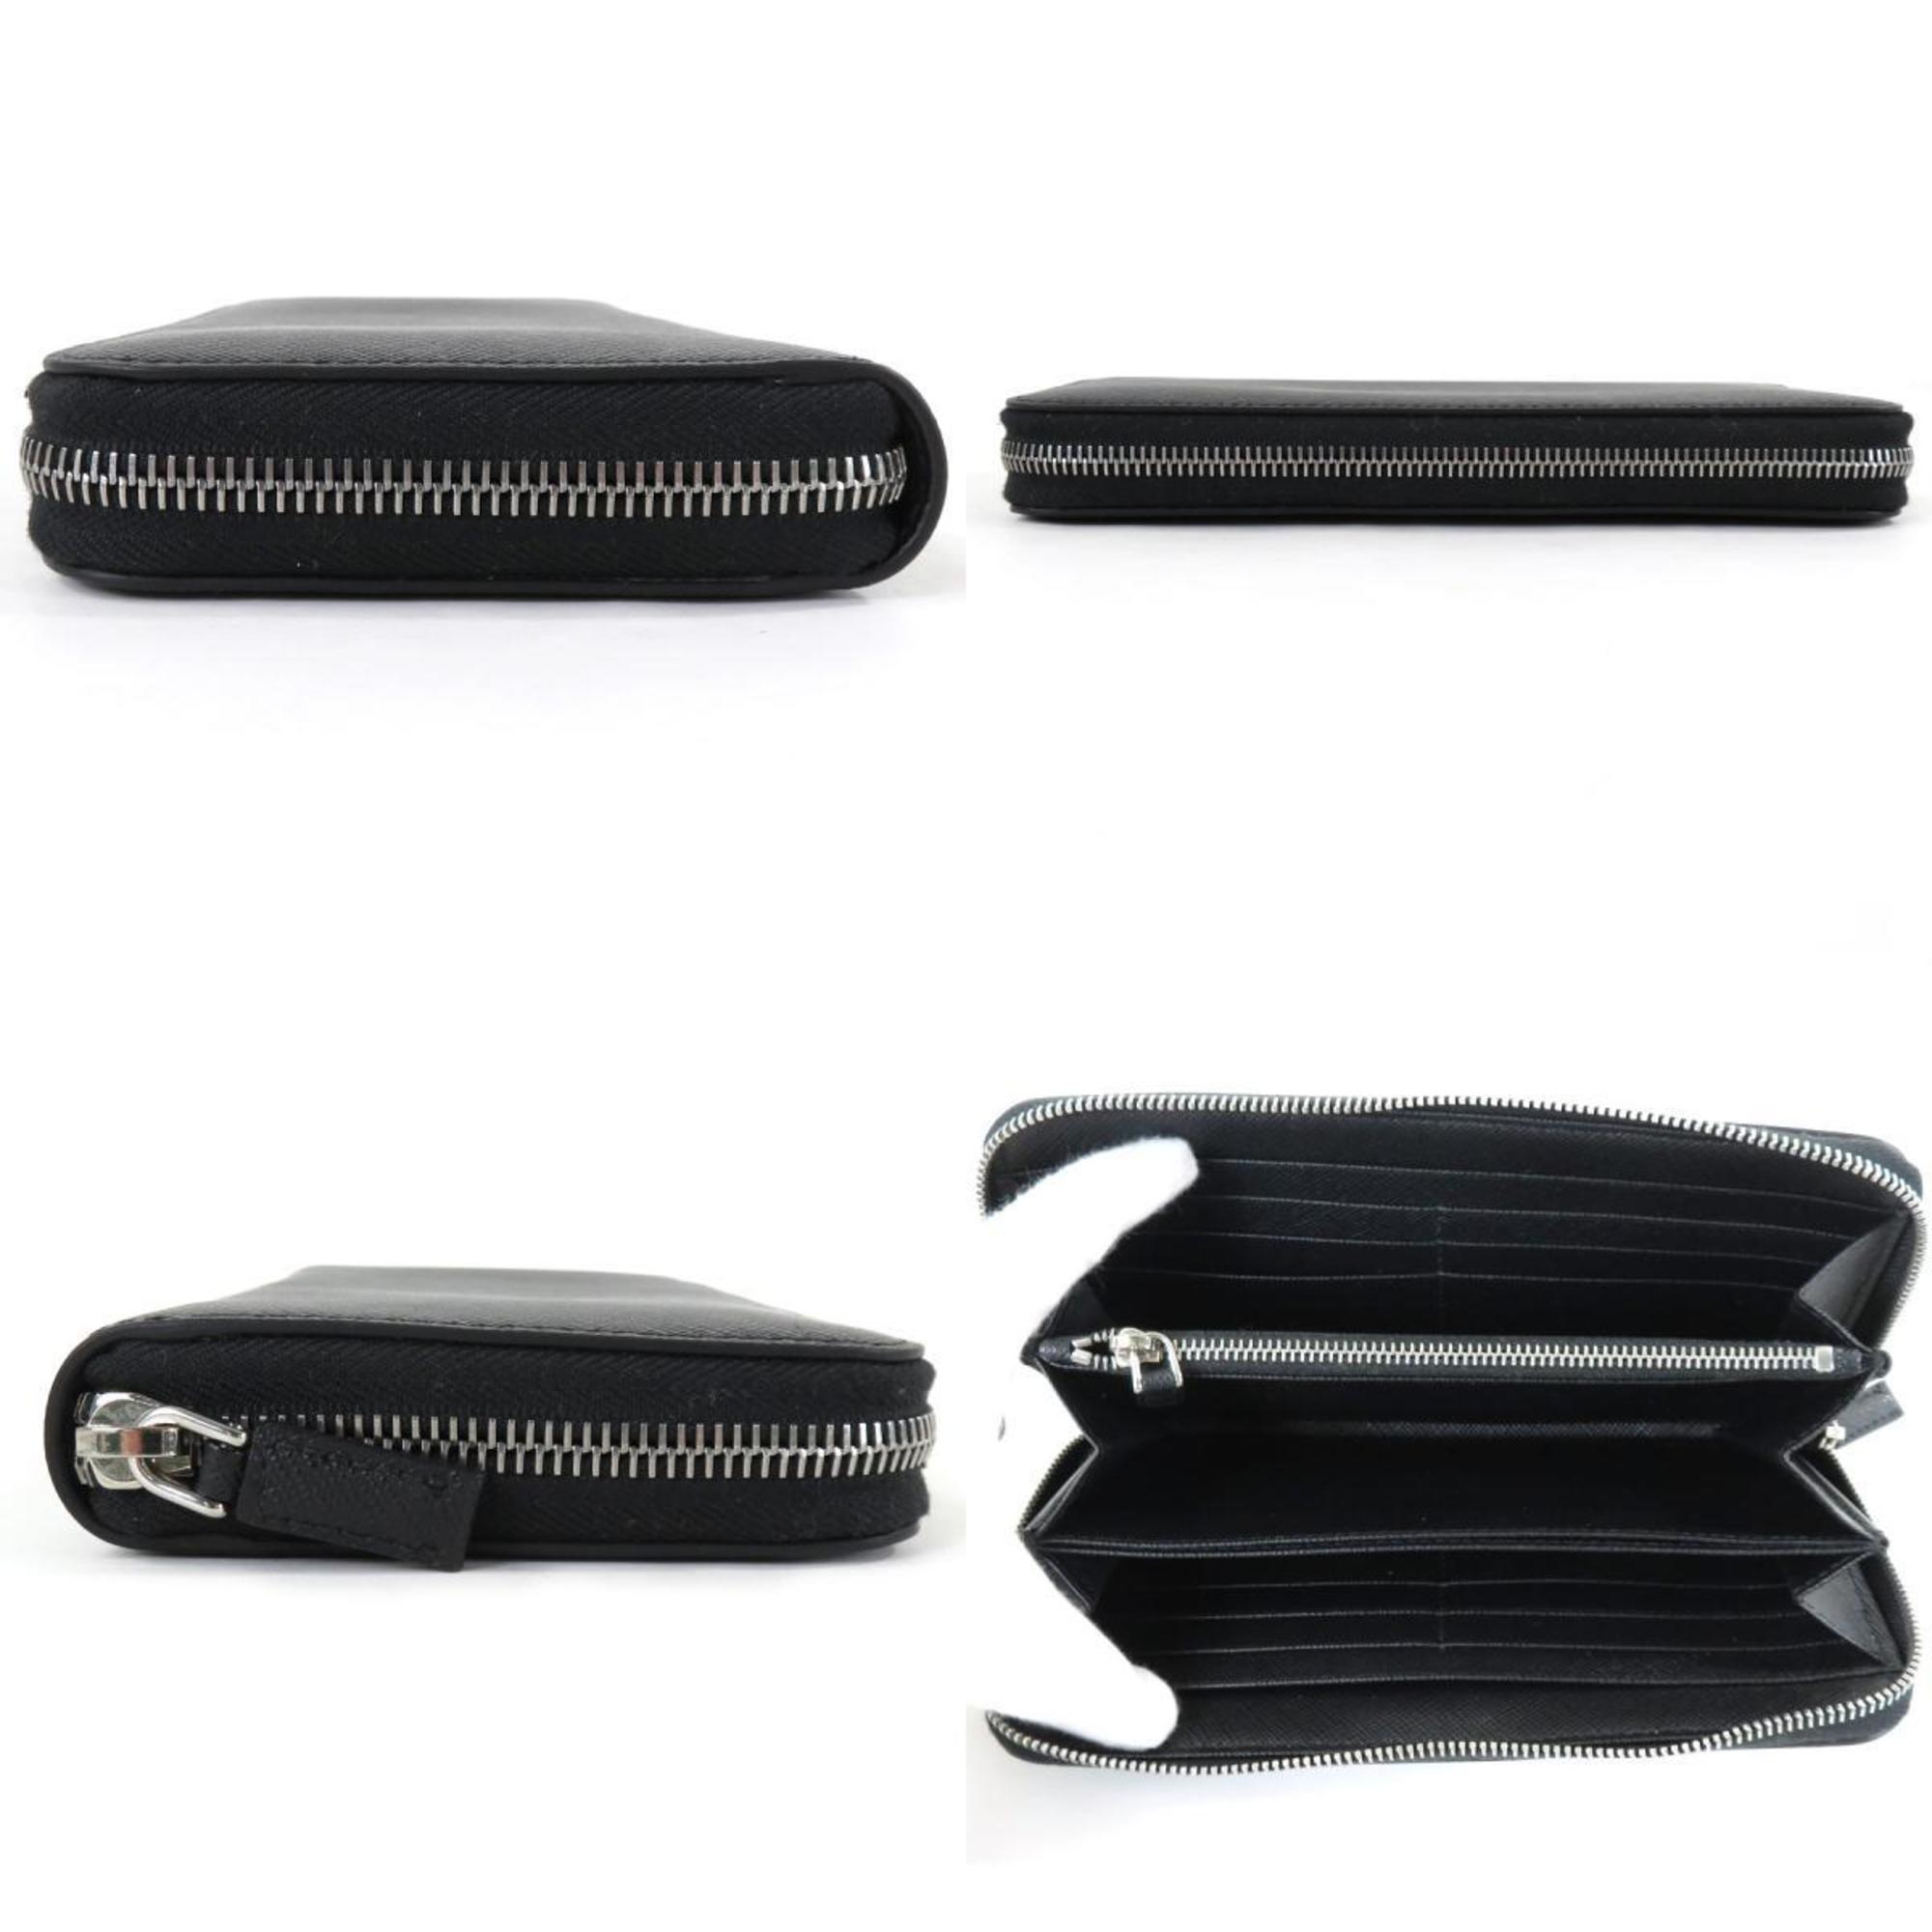 Prada PRADA Round Zipper Long Wallet Leather Black Unisex 2ML317